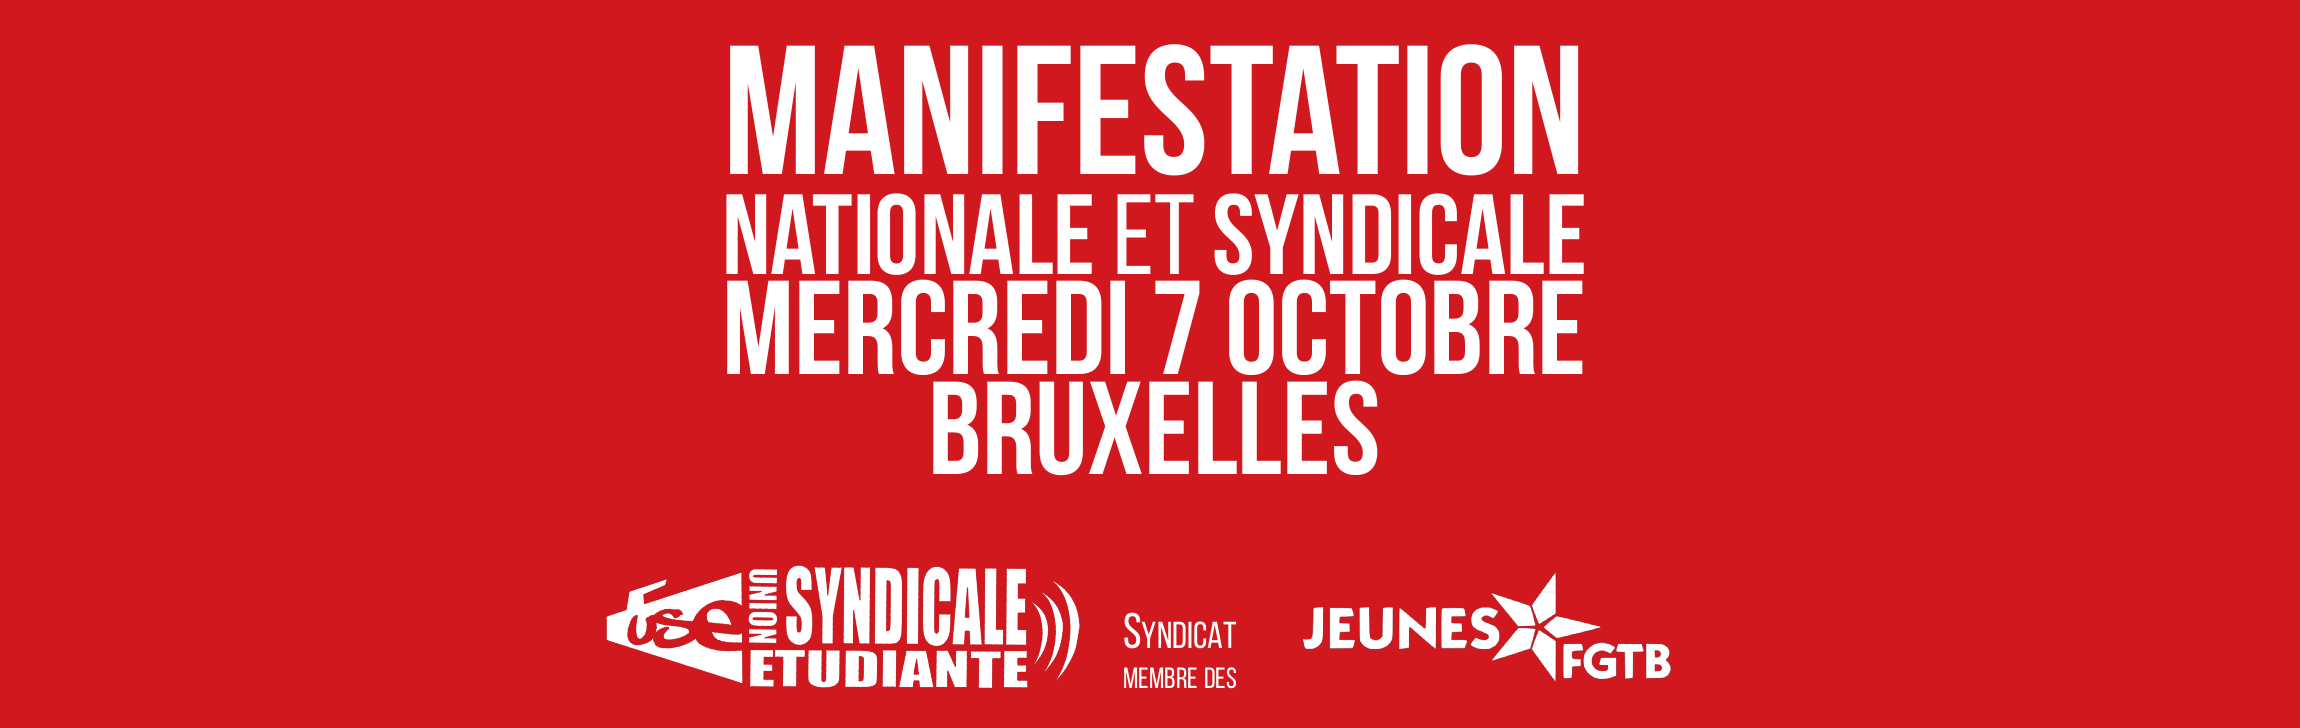 Manifestation syndicale nationale du 7 octobre 2015